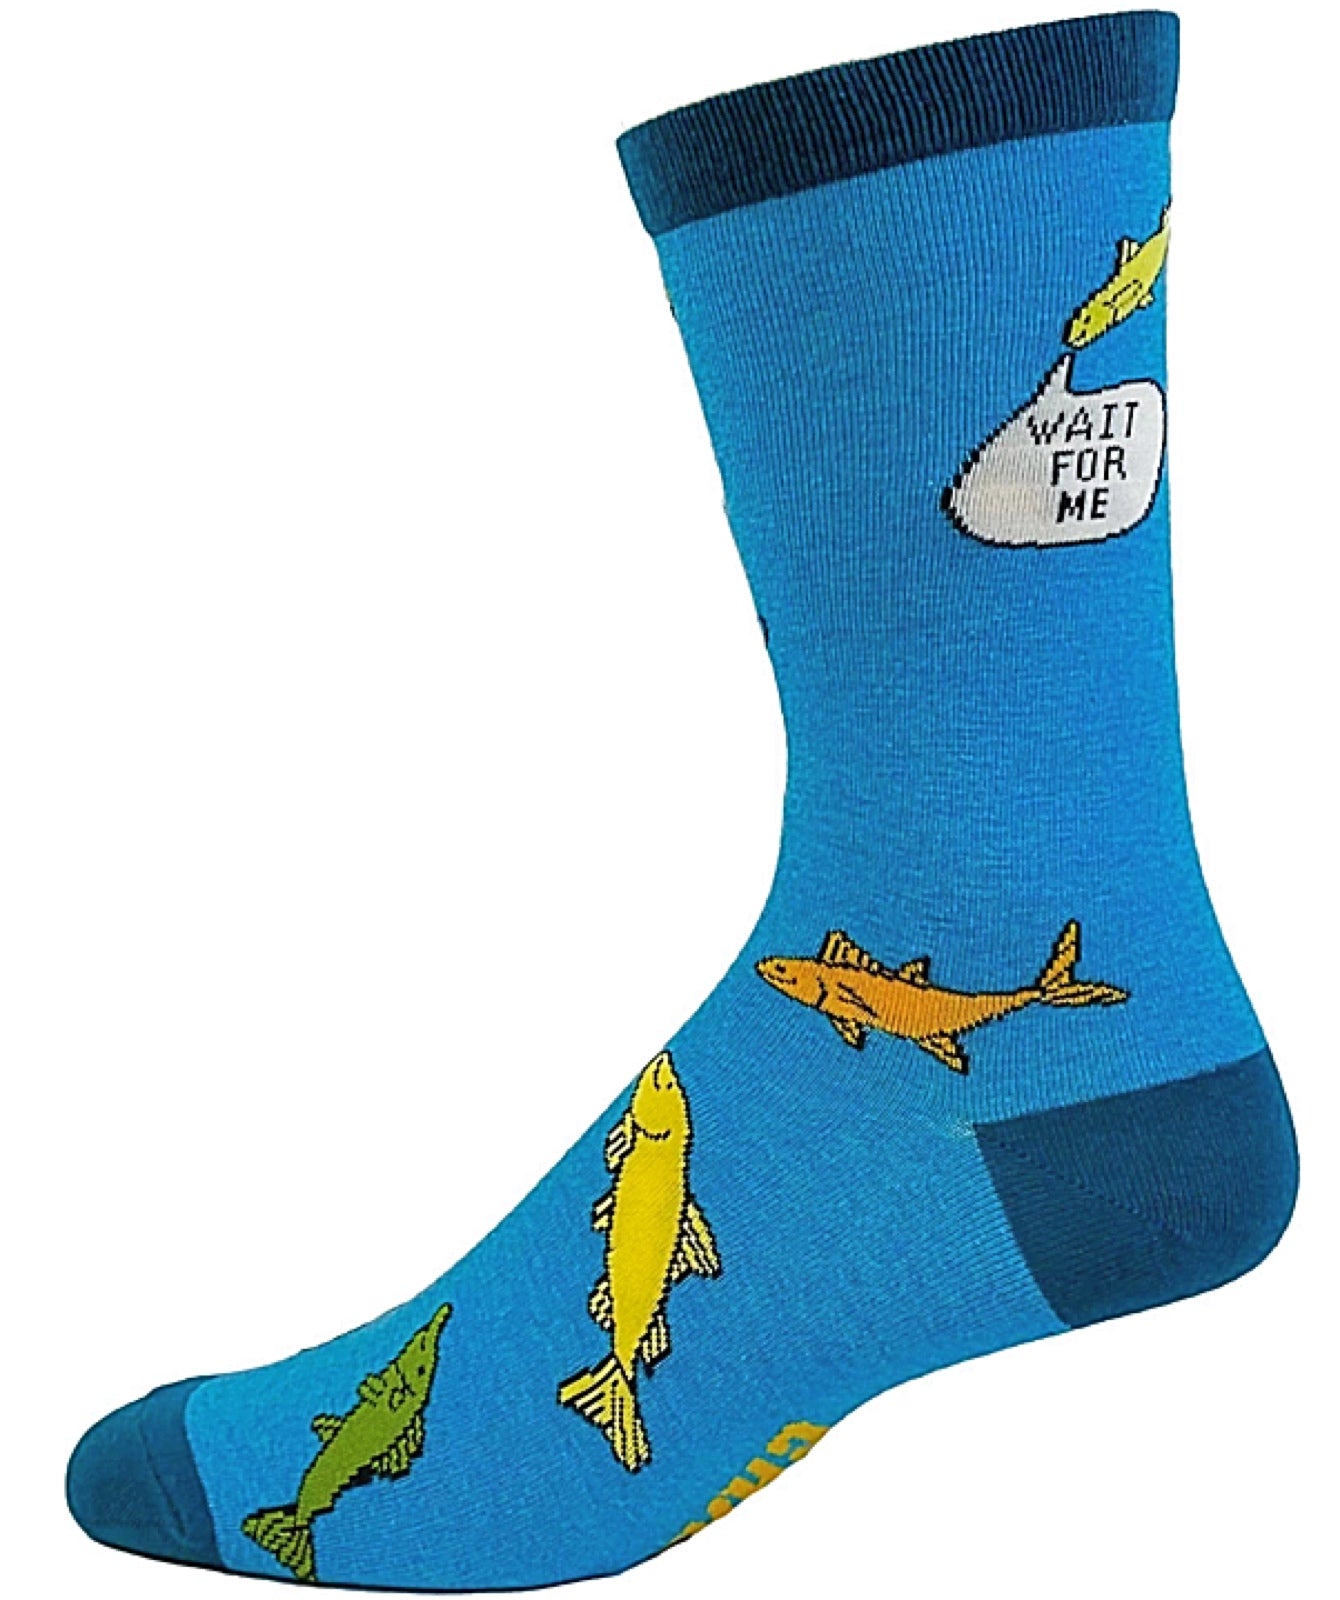 CRAZY DOG Brand Men's FISHING Socks 'I'M SO GOOD WITH MY ROD I MAKE FISH  COME